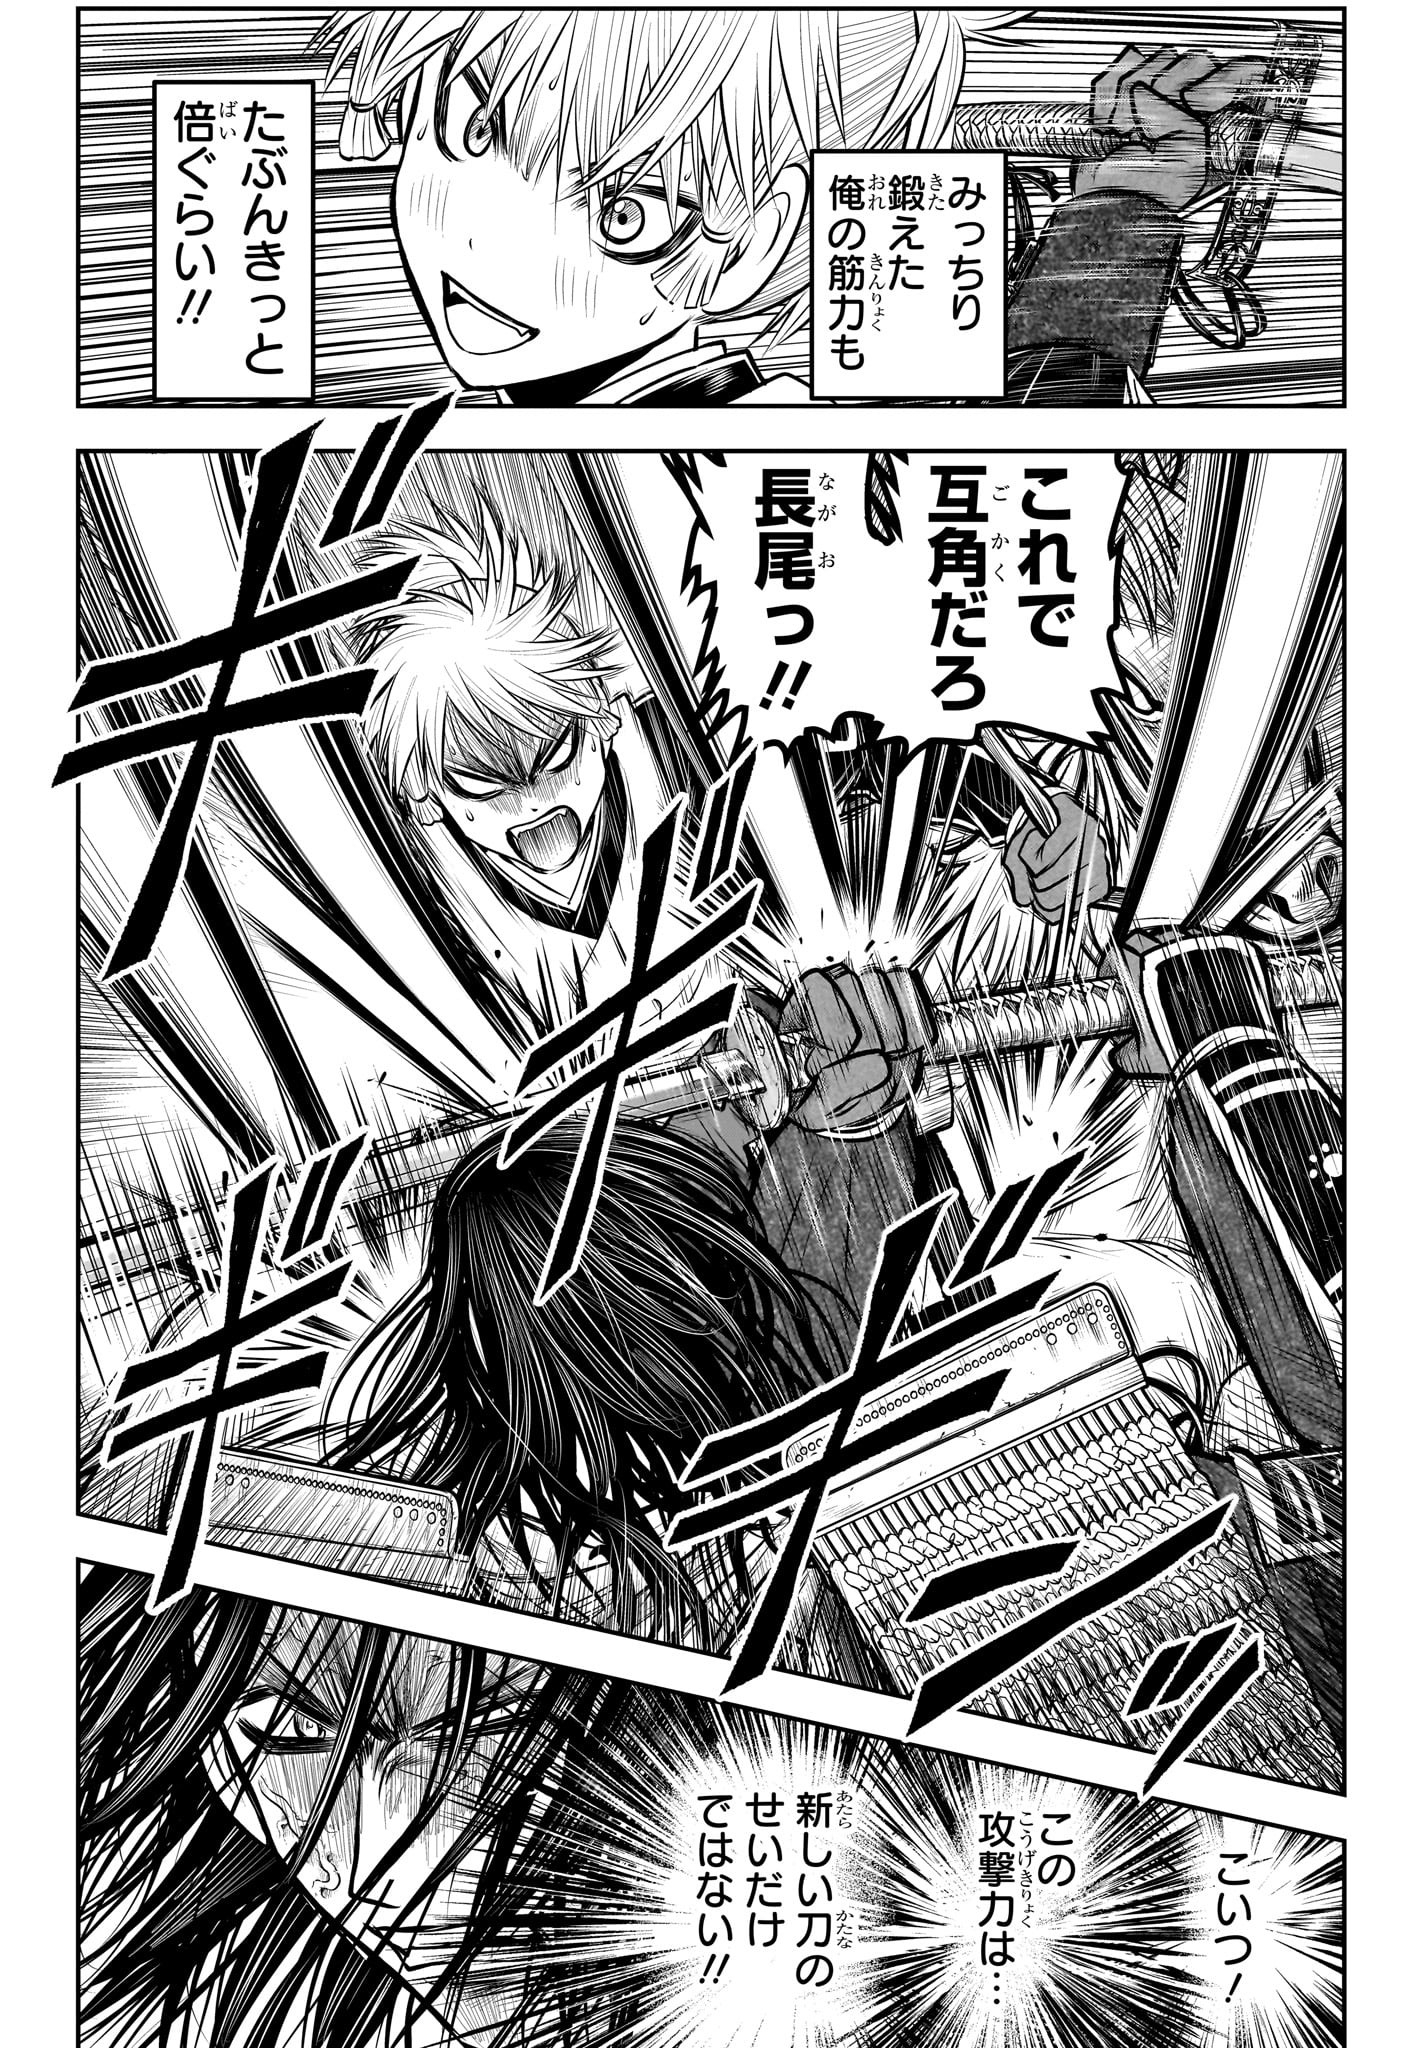 Nige Jouzu no Wakagimi - Chapter 139 - Page 2